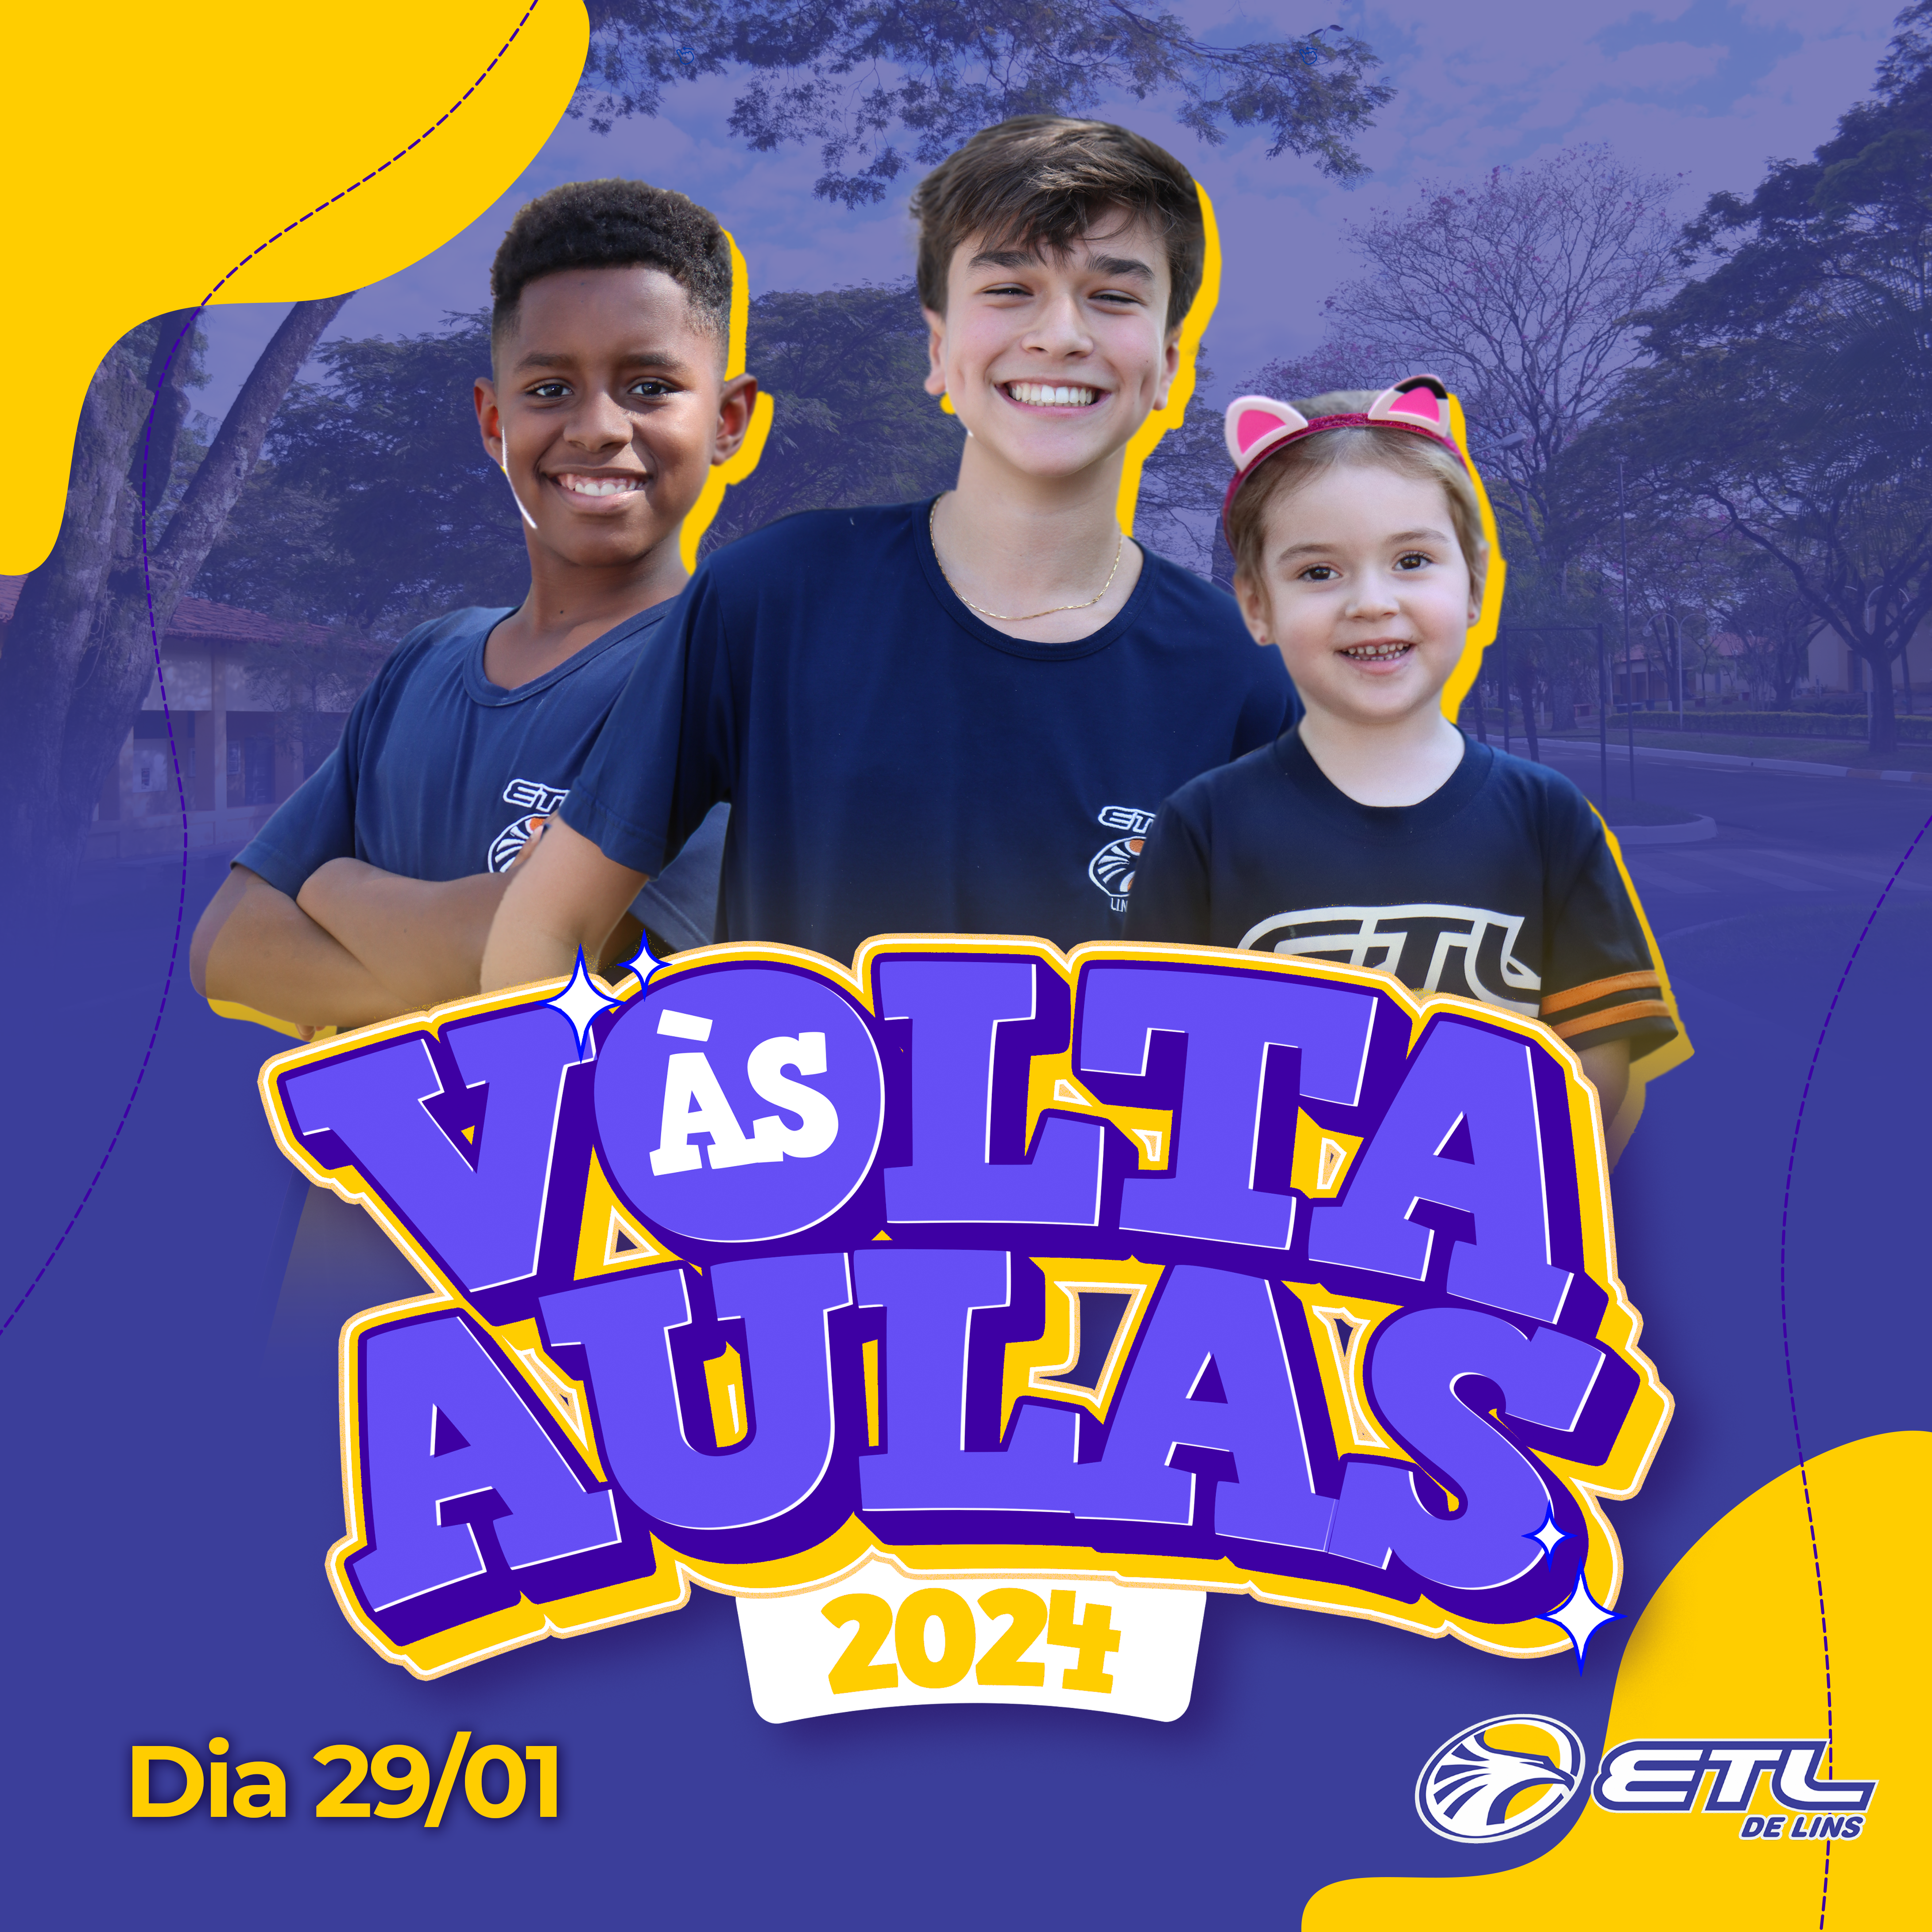 VOLTA ÀS AULAS ETL DE LINS 2024 - 29/01 - ETL